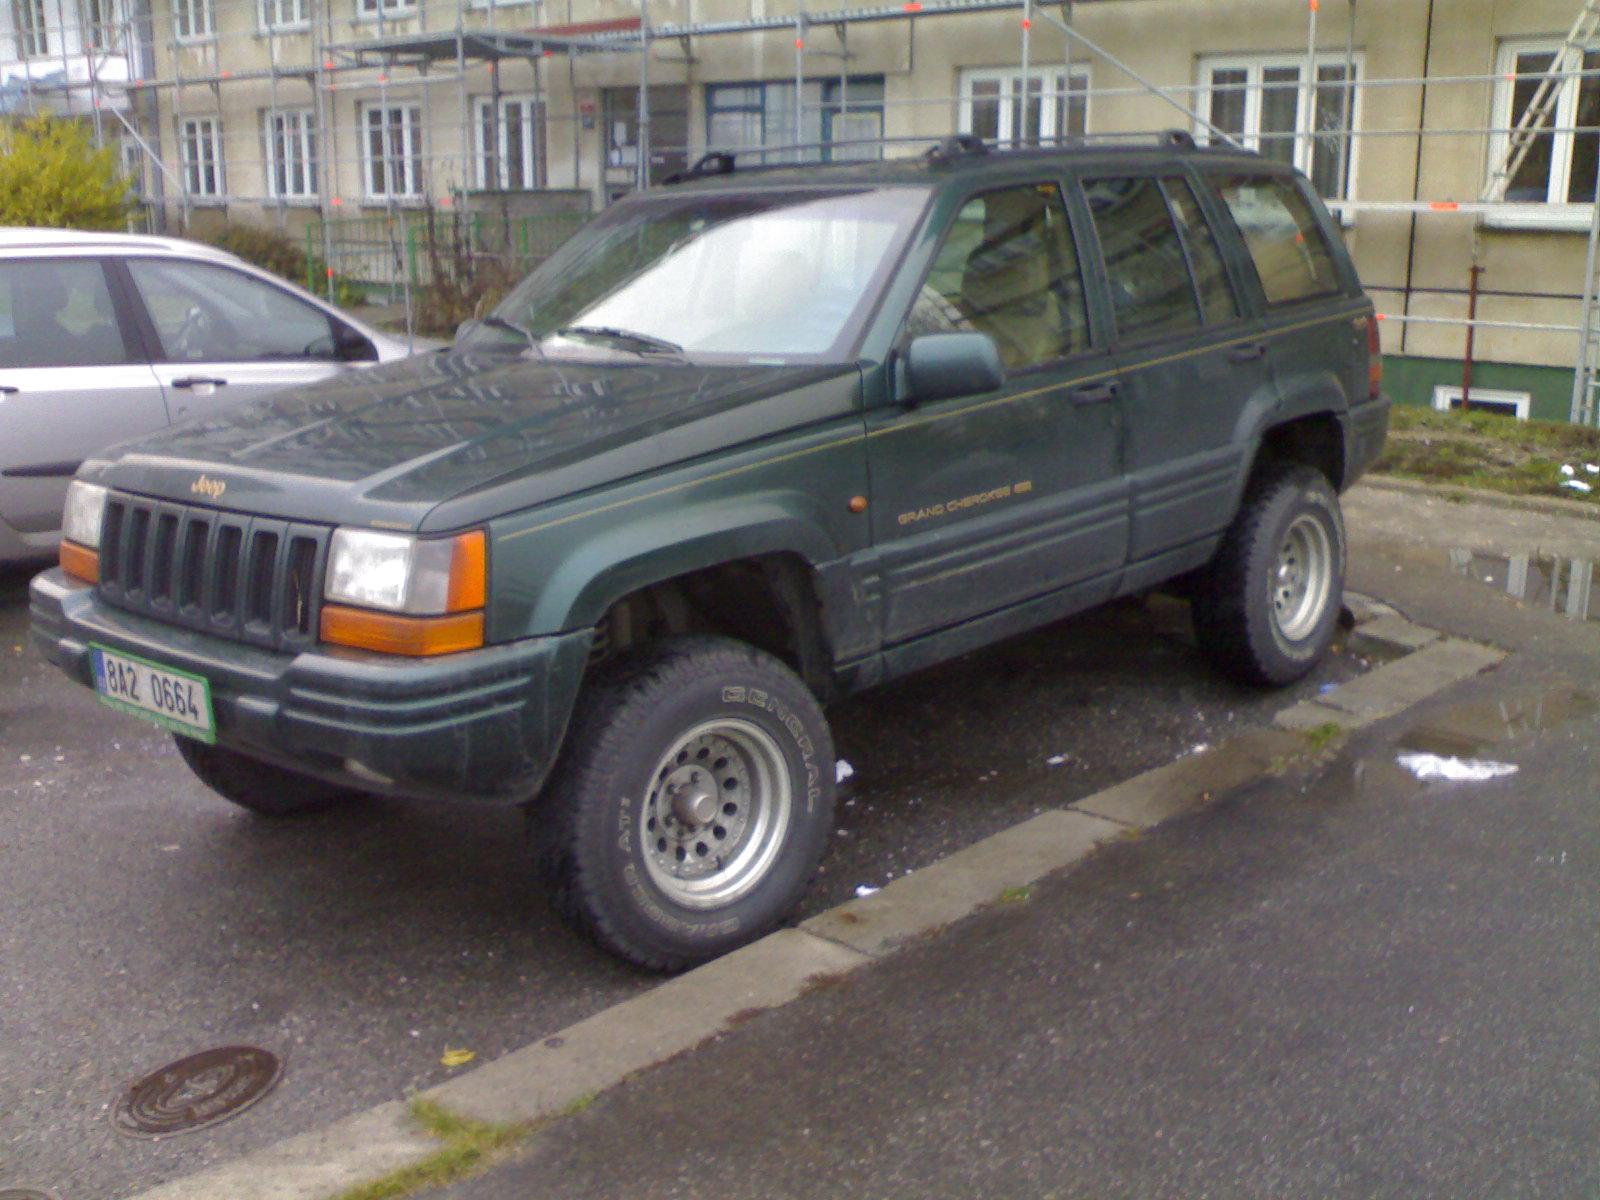 1998 Zj jeep grand cherokee 2.5